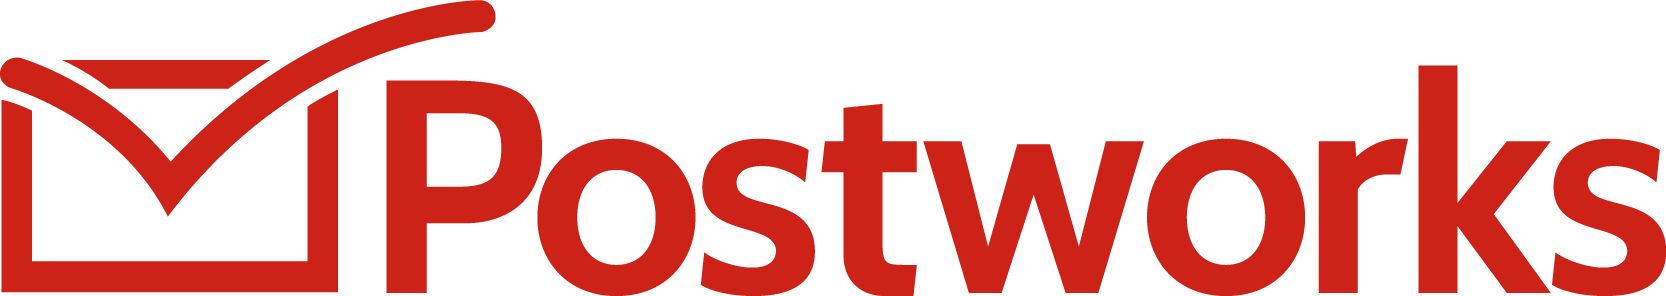 Postworks logo